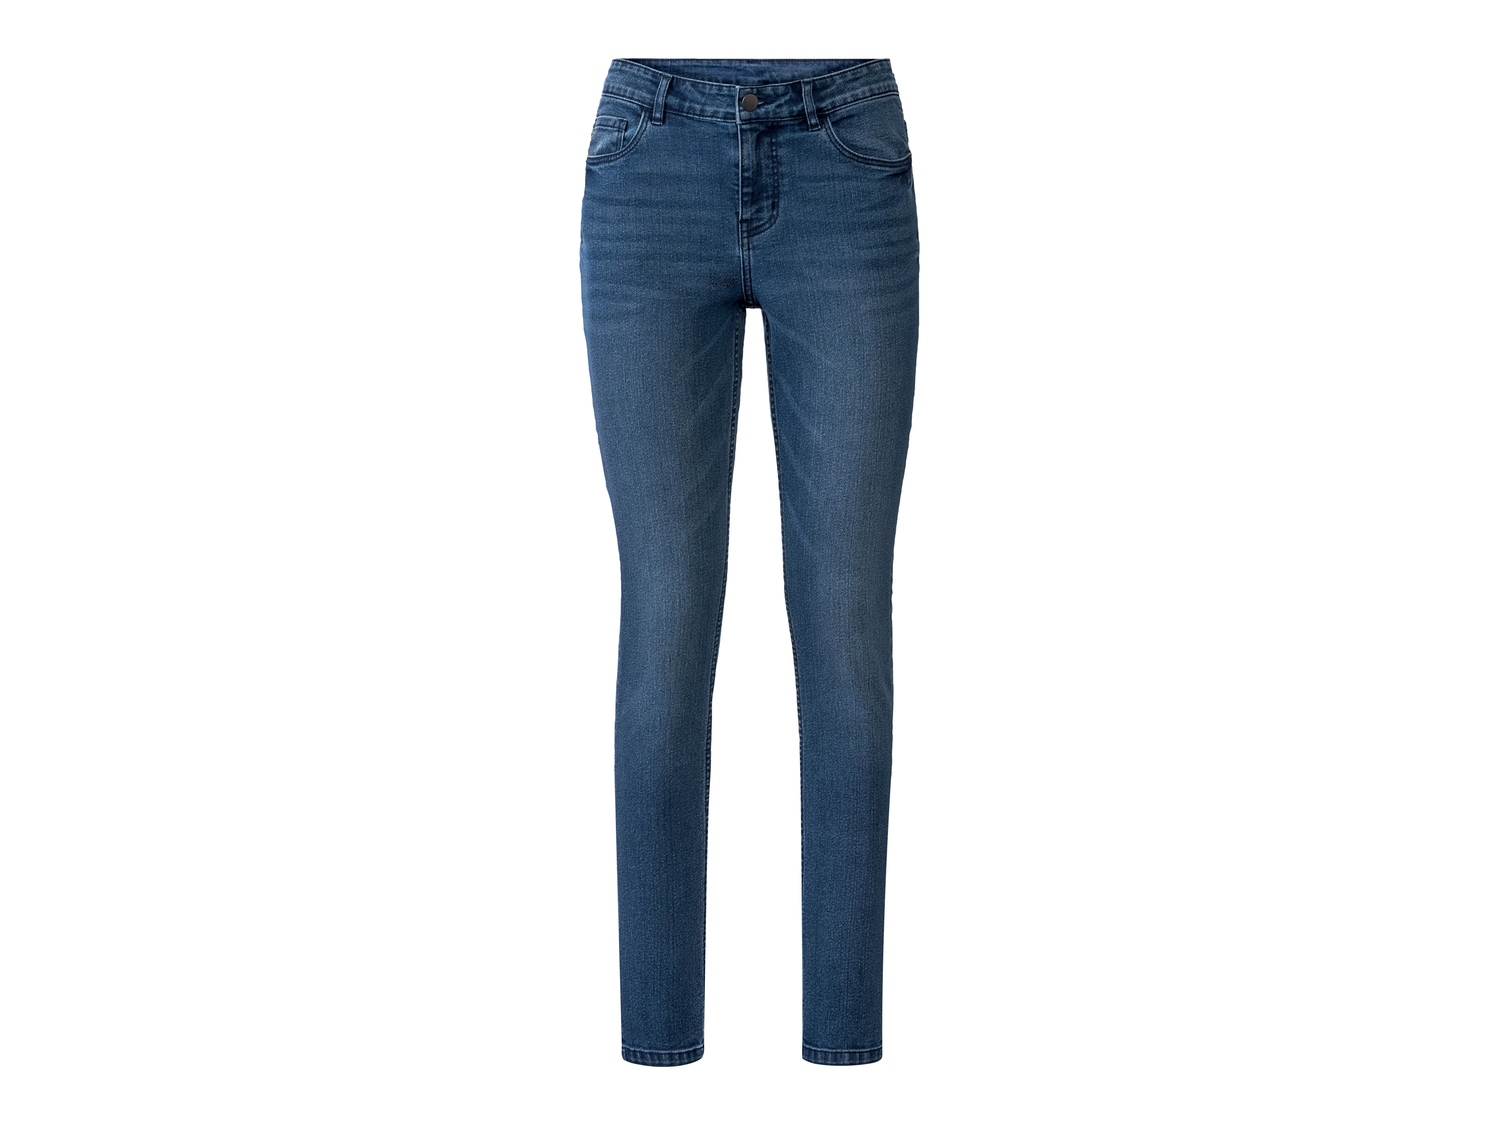 Jeans Skinny fit da donna Esmara, prezzo 11.99 &#8364; 
Misure: 38-48
Taglie ...